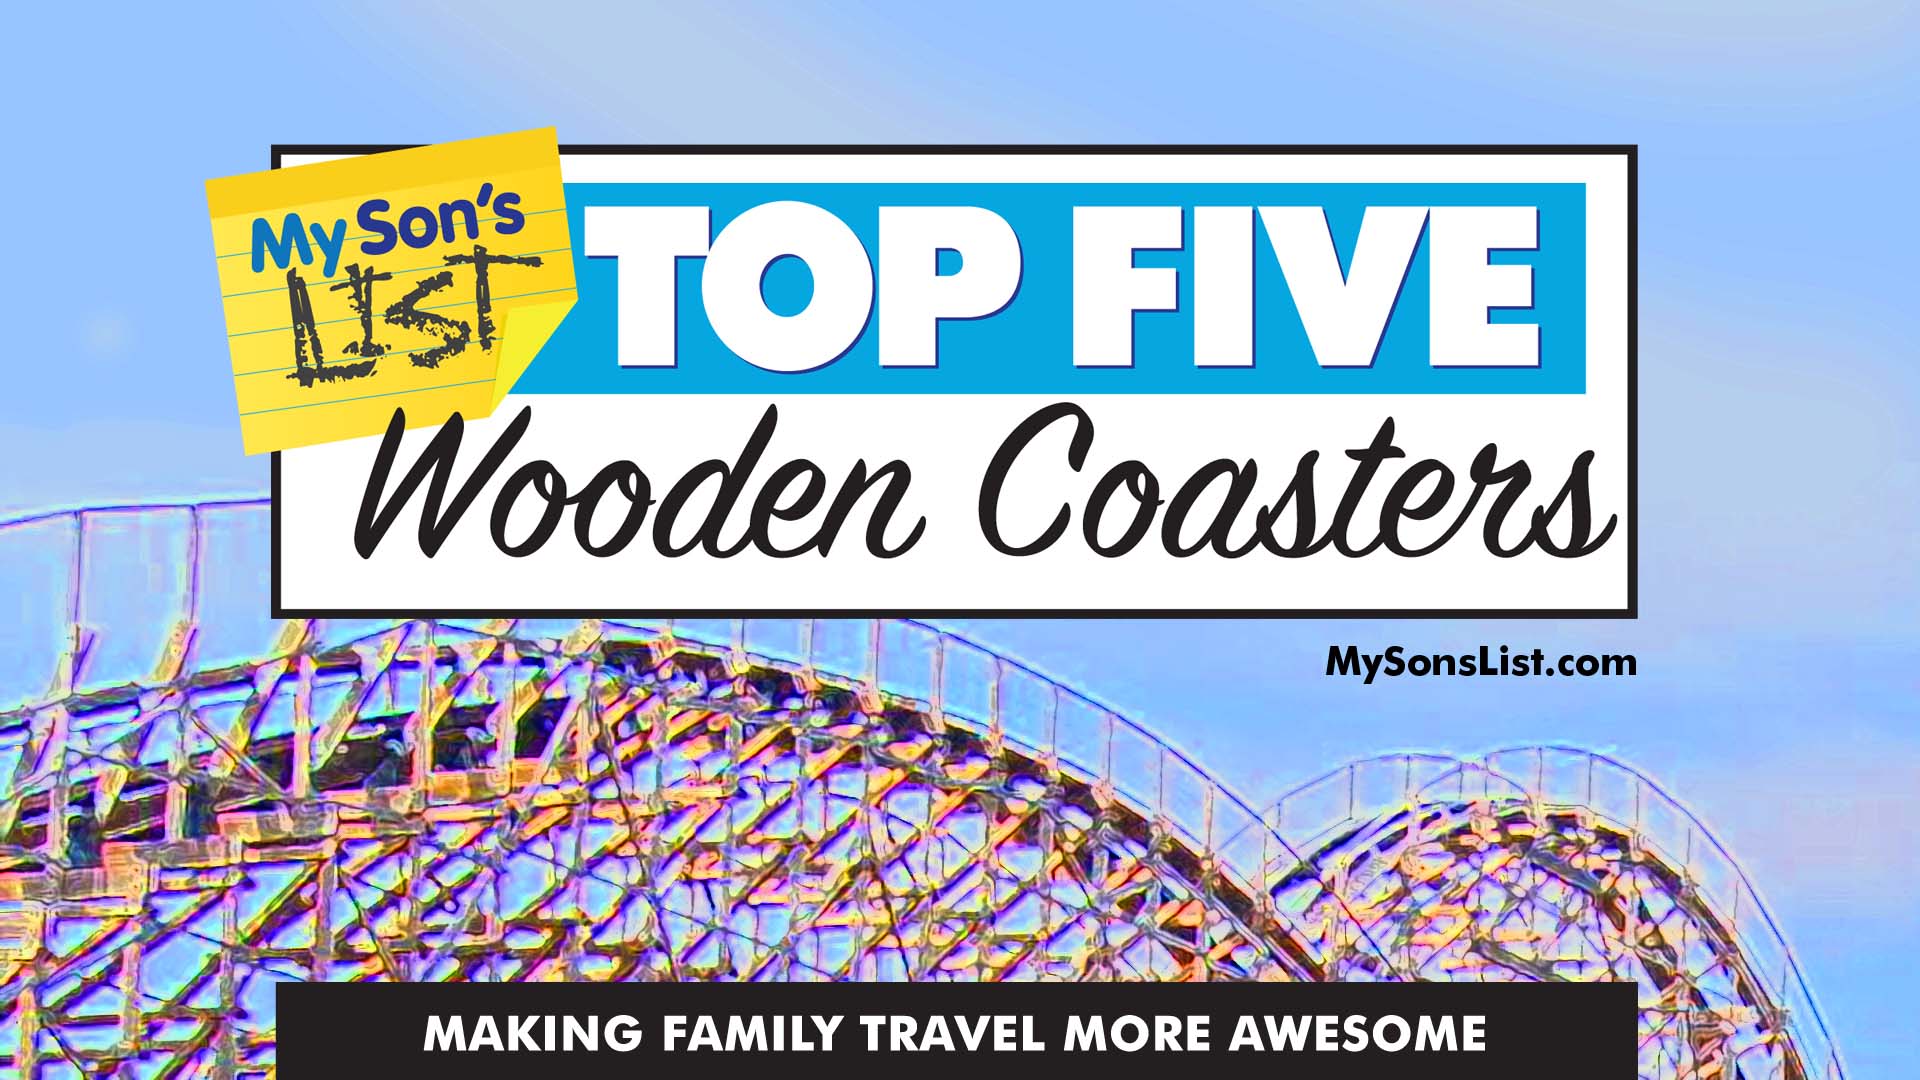 Top Five Wooden Coasters